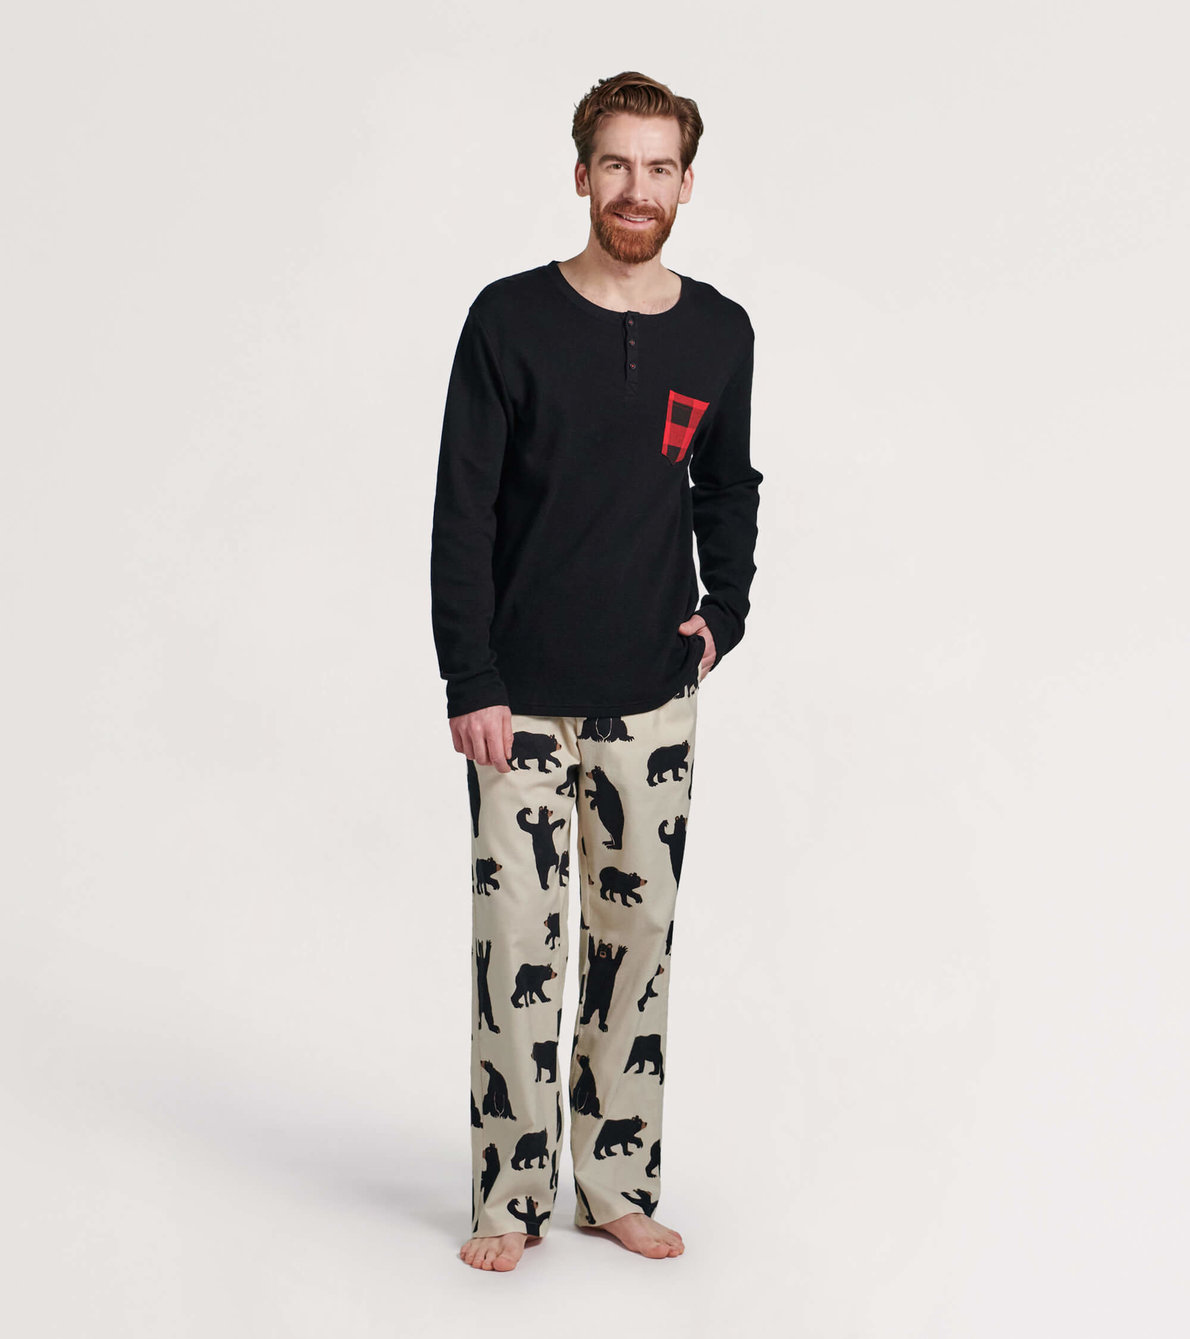 View larger image of Black Bears Men's Flannel Pajama Pants